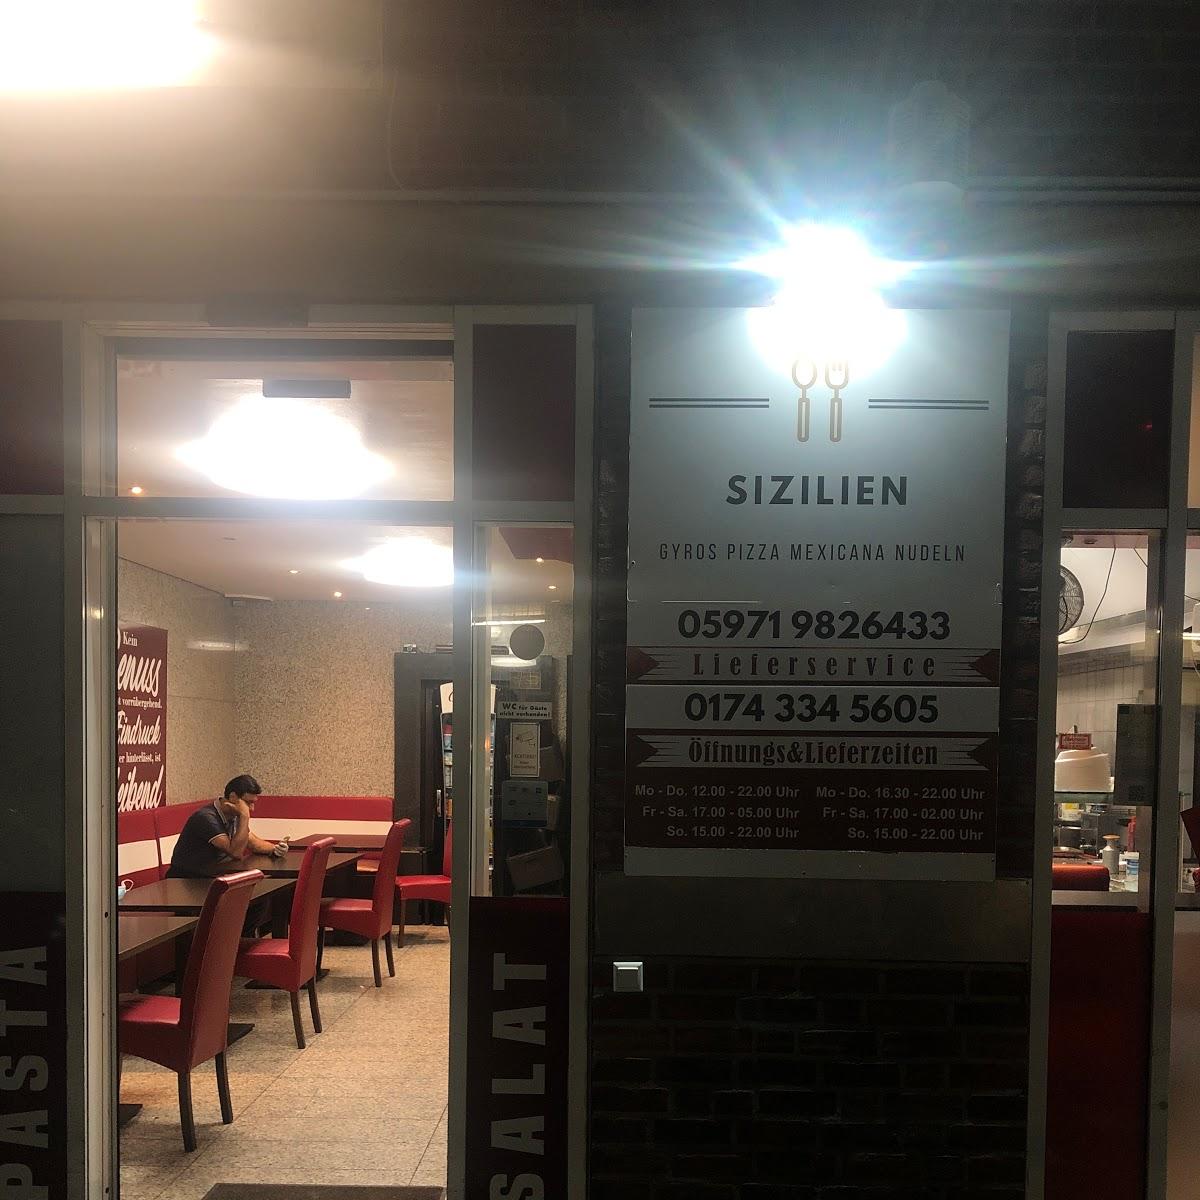 Restaurant "Sizilien - Gyros Pizza Mexicana Nudeln (bei Antonio)" in Rheine